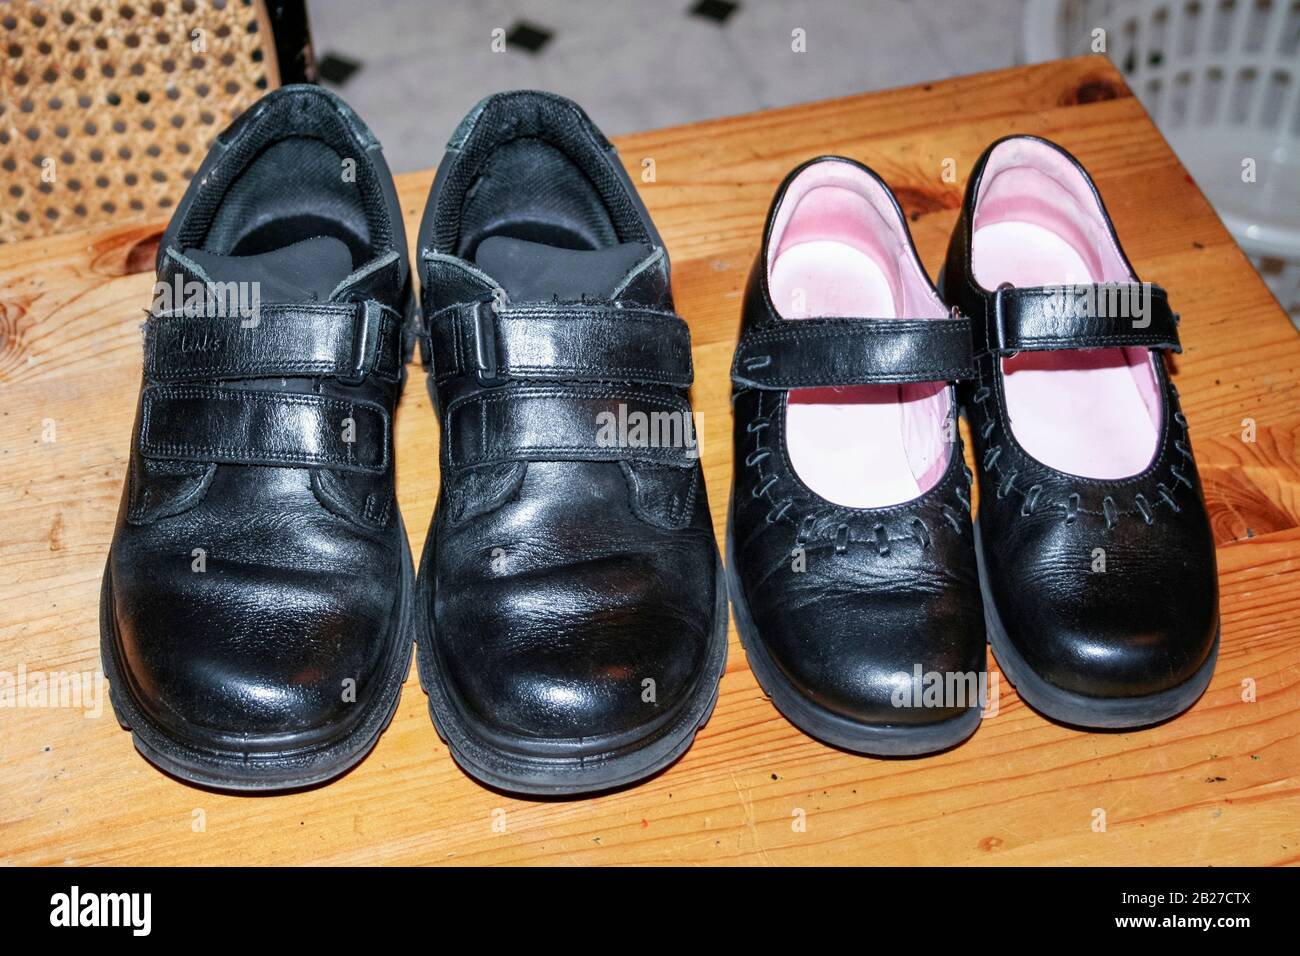 Boys Black School Shoes Outlet Here, Save 46% | jlcatj.gob.mx